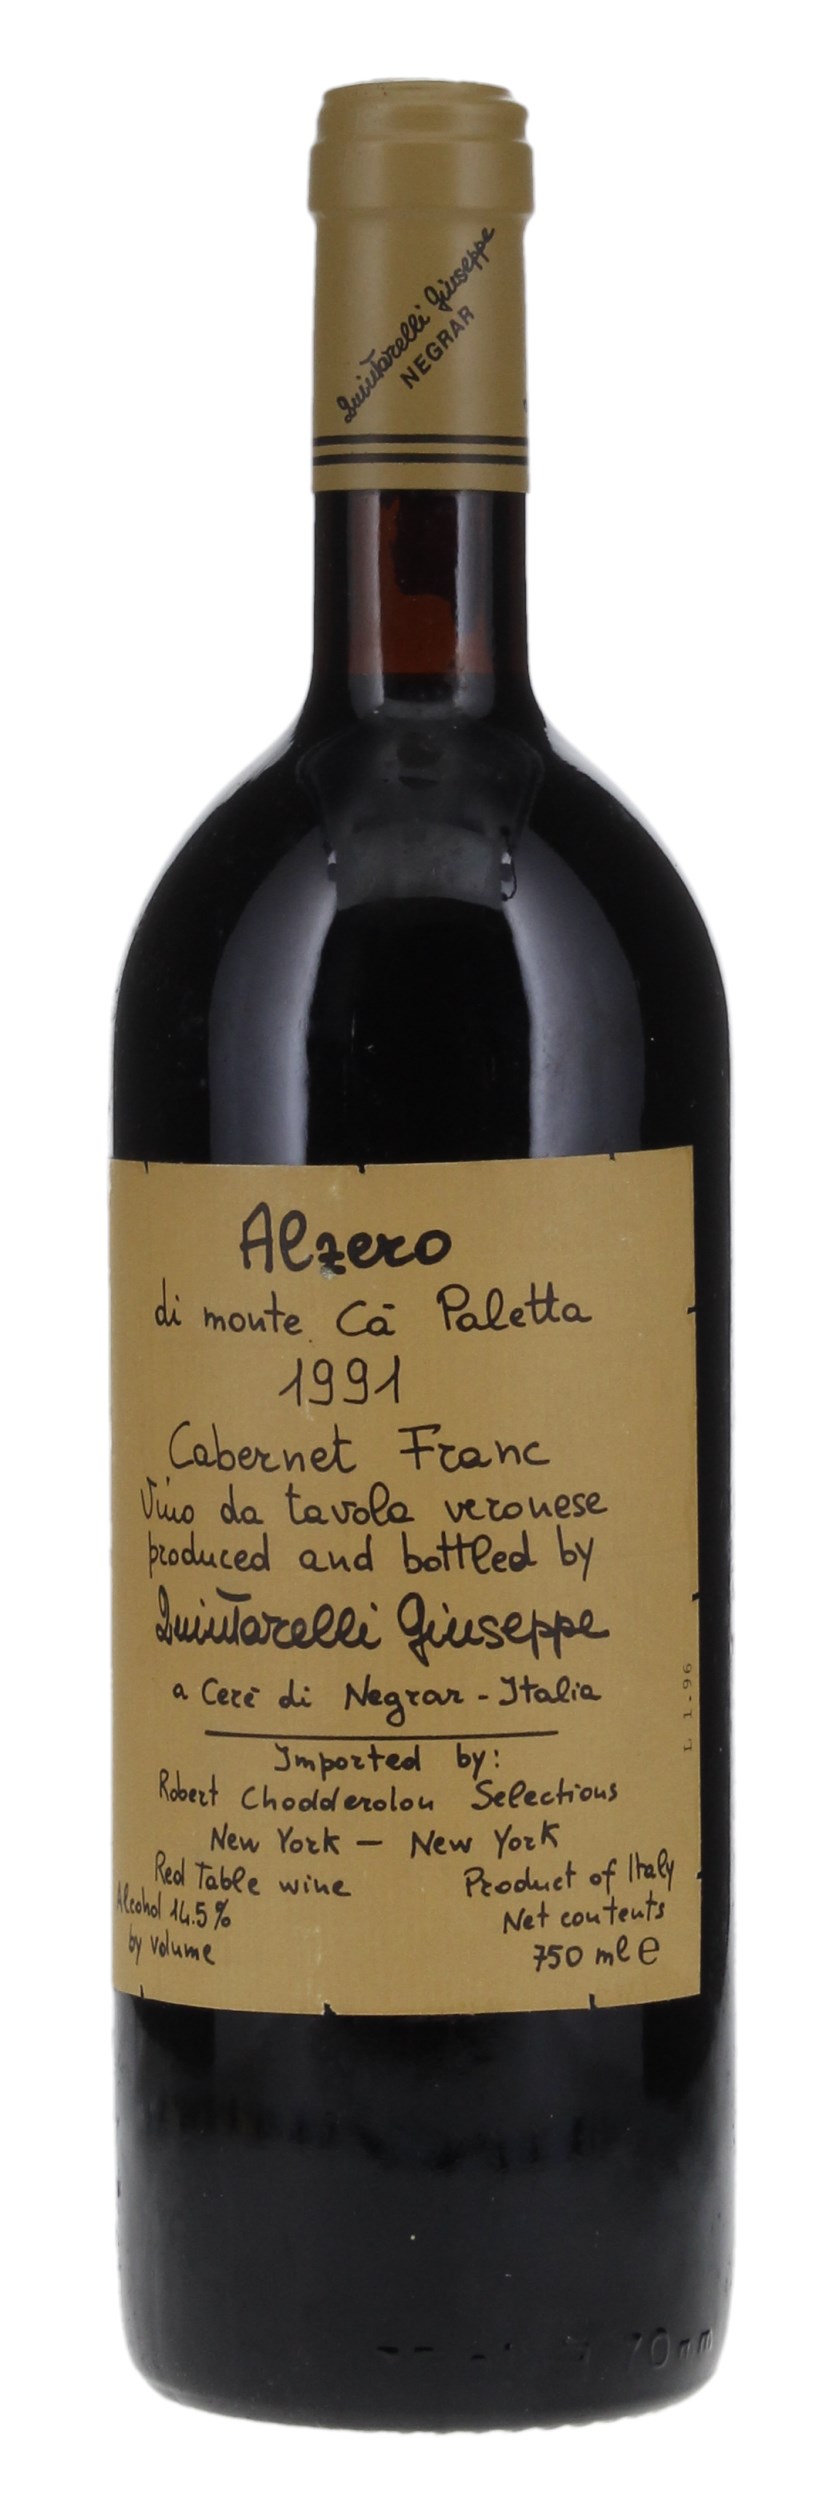 1991 Giuseppe Quintarelli Alzero Cabernet (Franc), 750ml